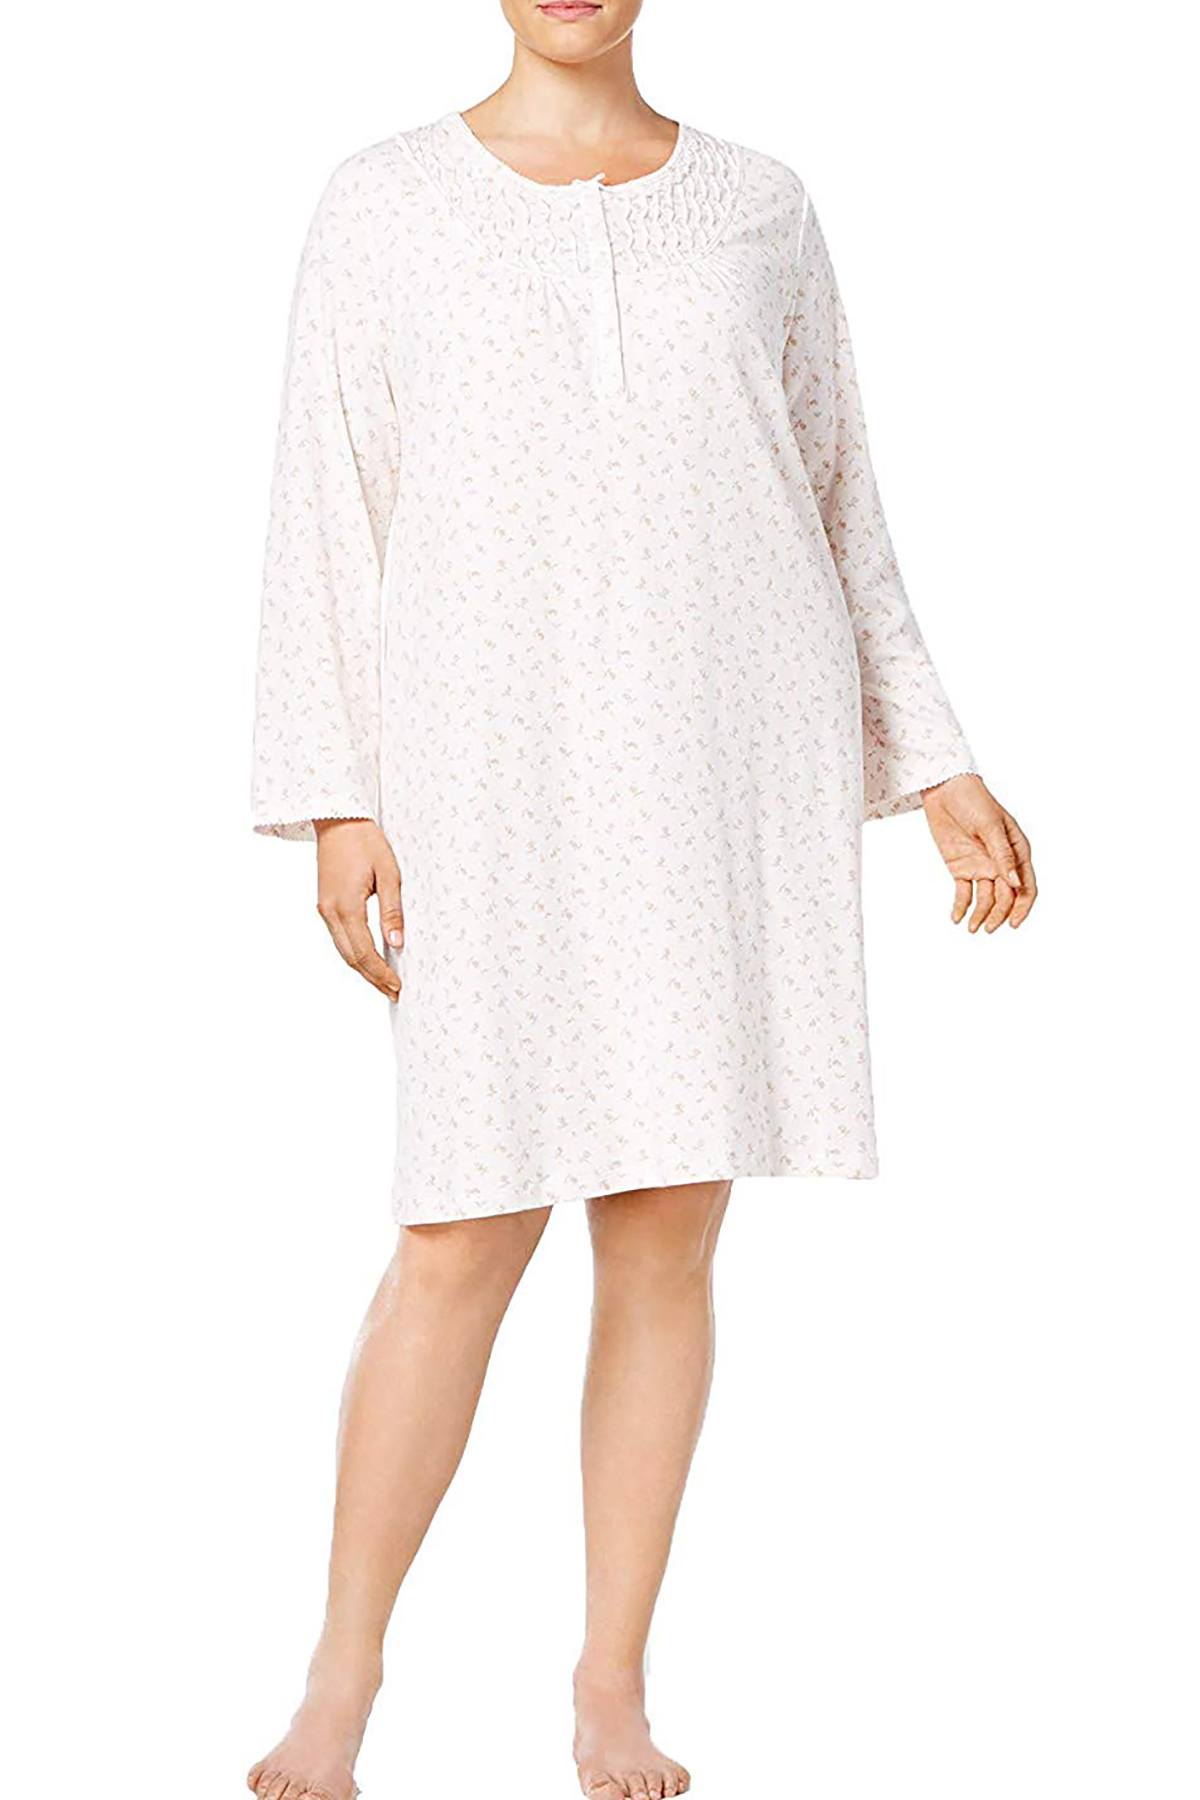 Miss Elaine PLUS Neutral-Rosebuds Printed Nightgown